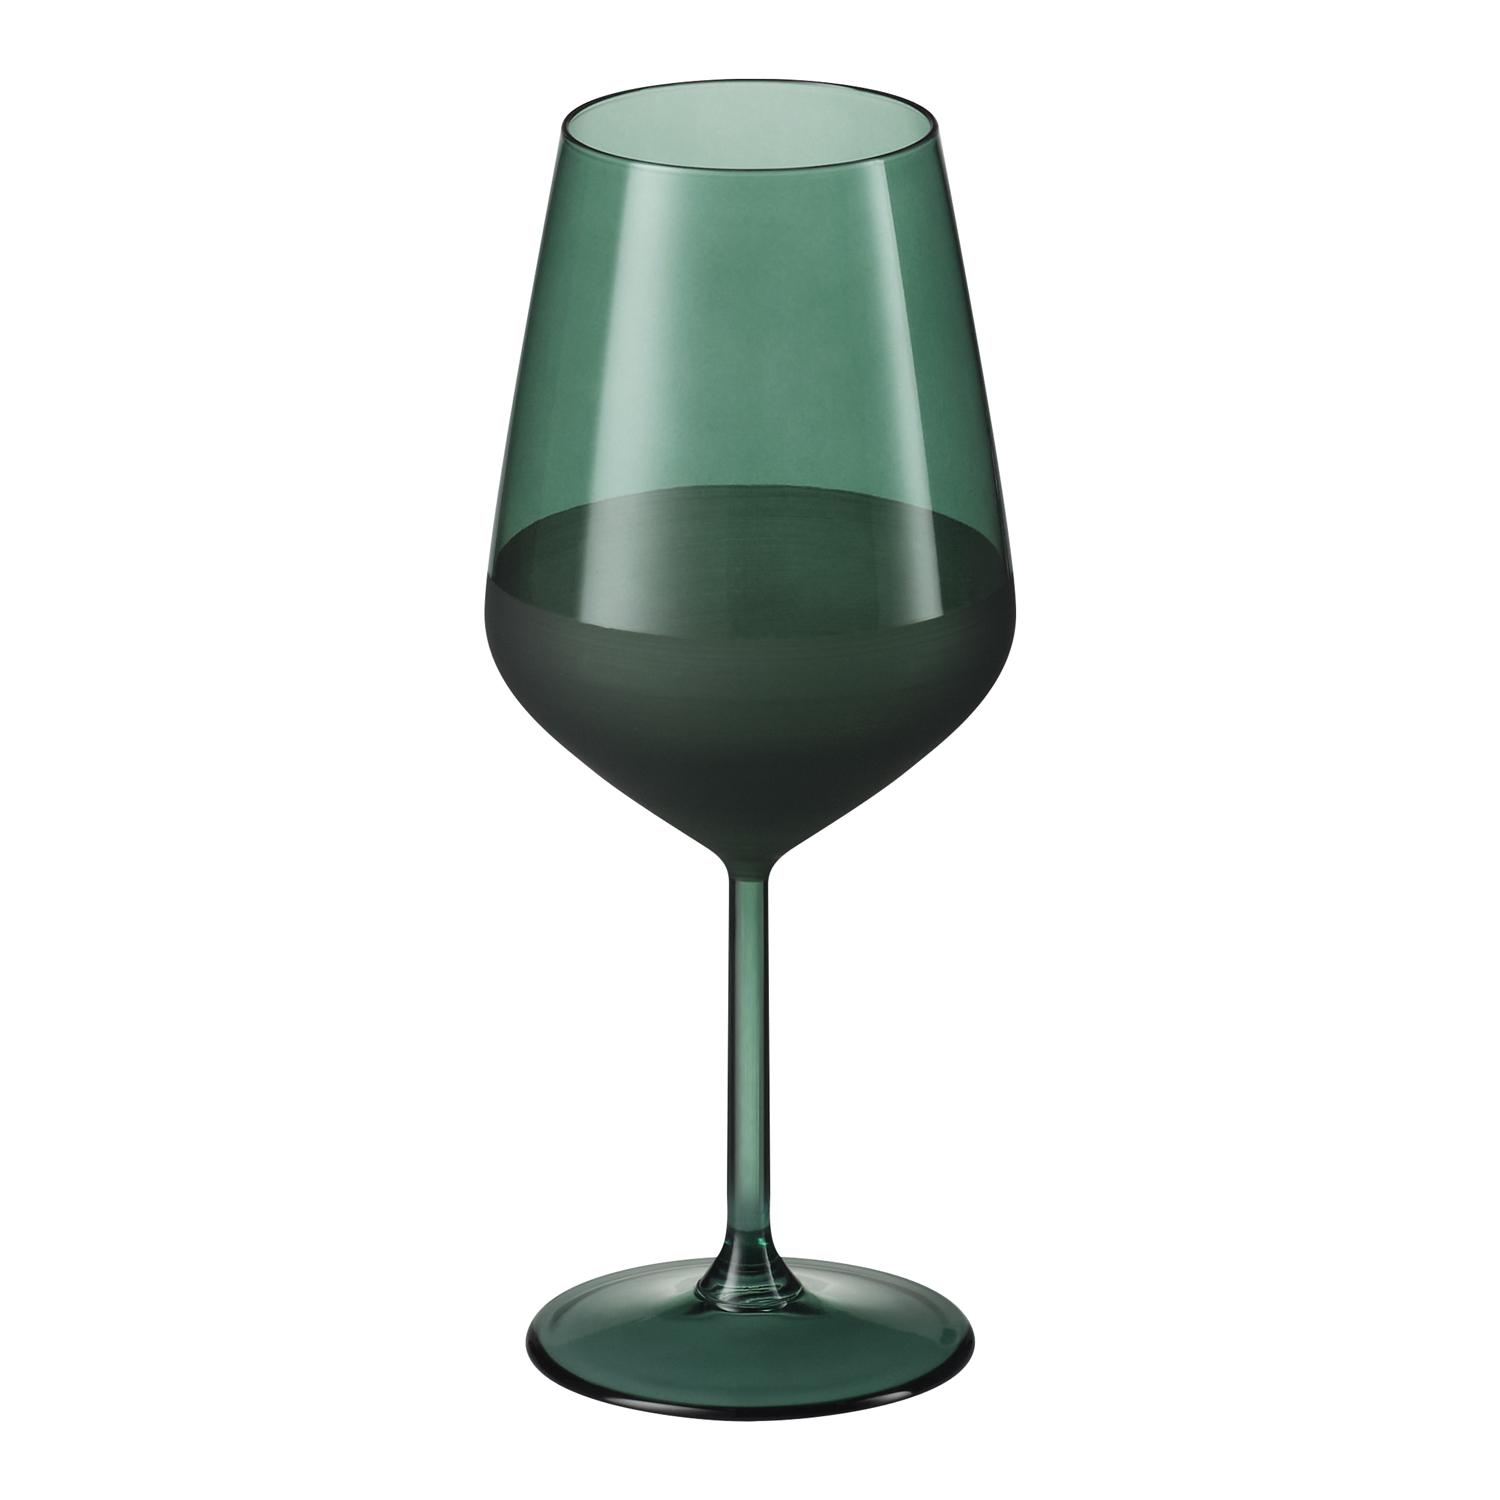 Артикул: A73065.040 — Бокал для вина, Emerald, 490 ml, зеленый